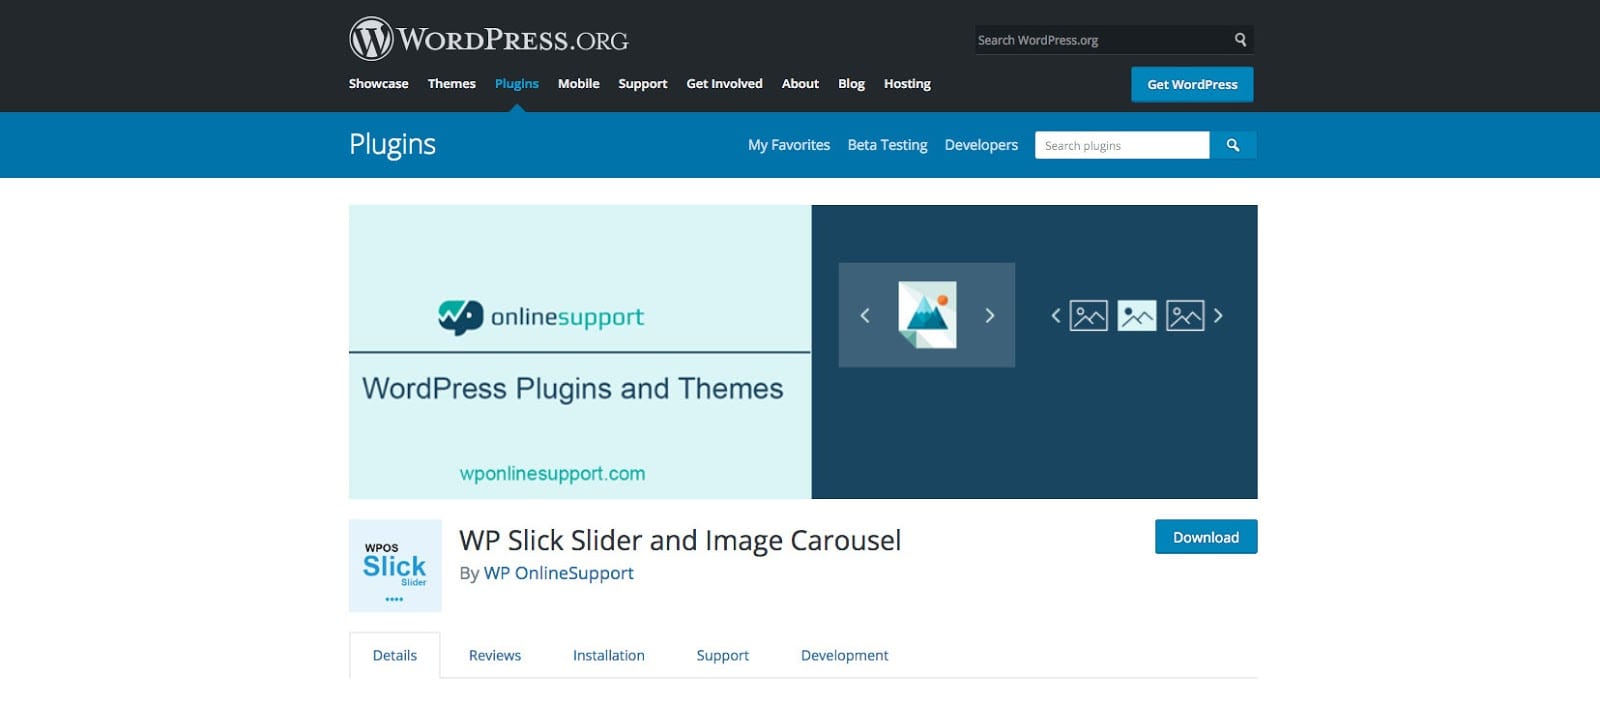 WP Slick Slider and Image Carousel – WordPress plugin WordPress org